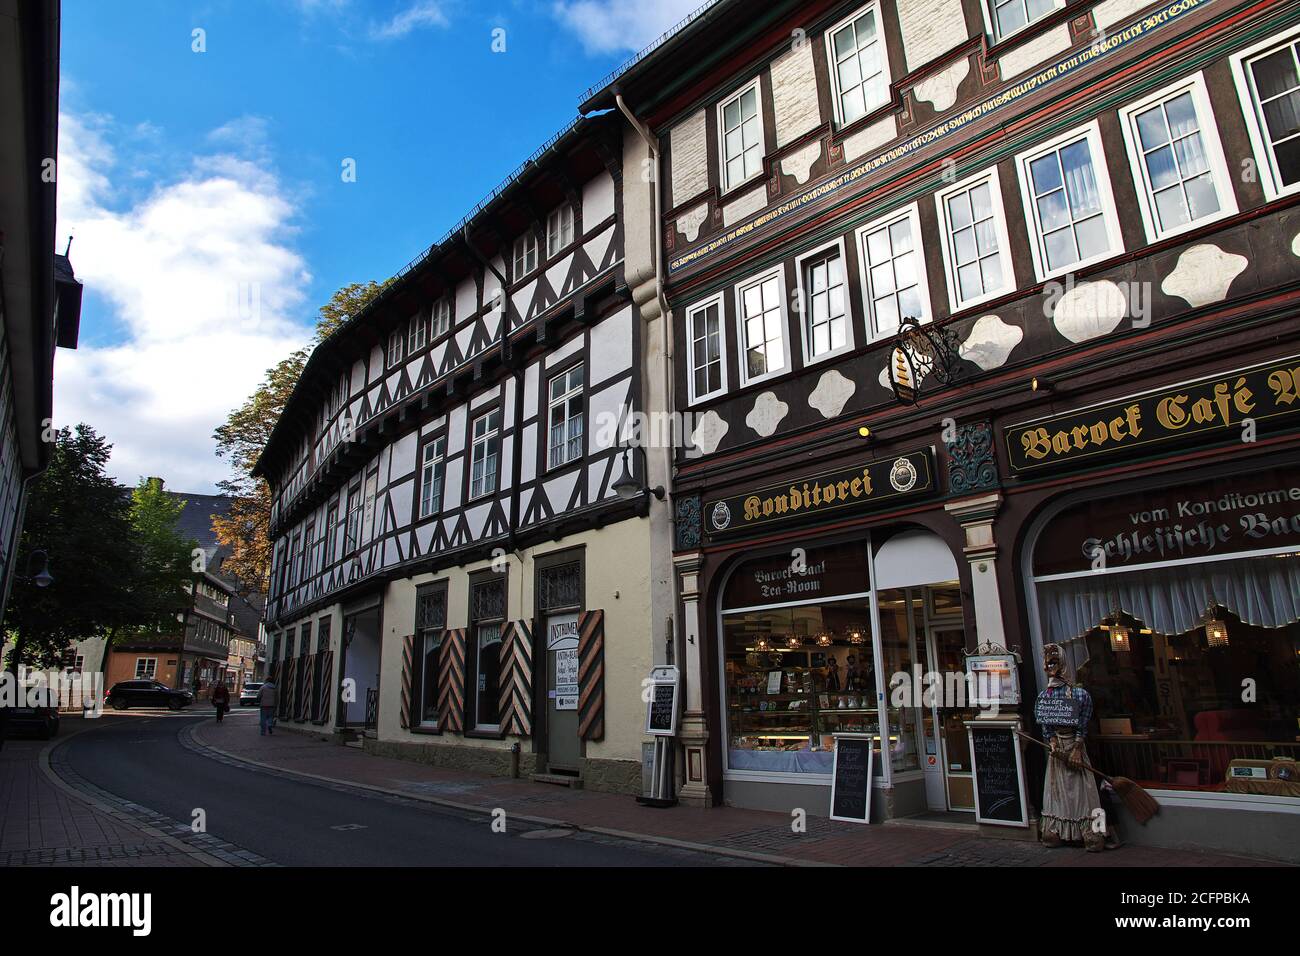 Fachwerk house in Goslar city, Germany Stock Photo